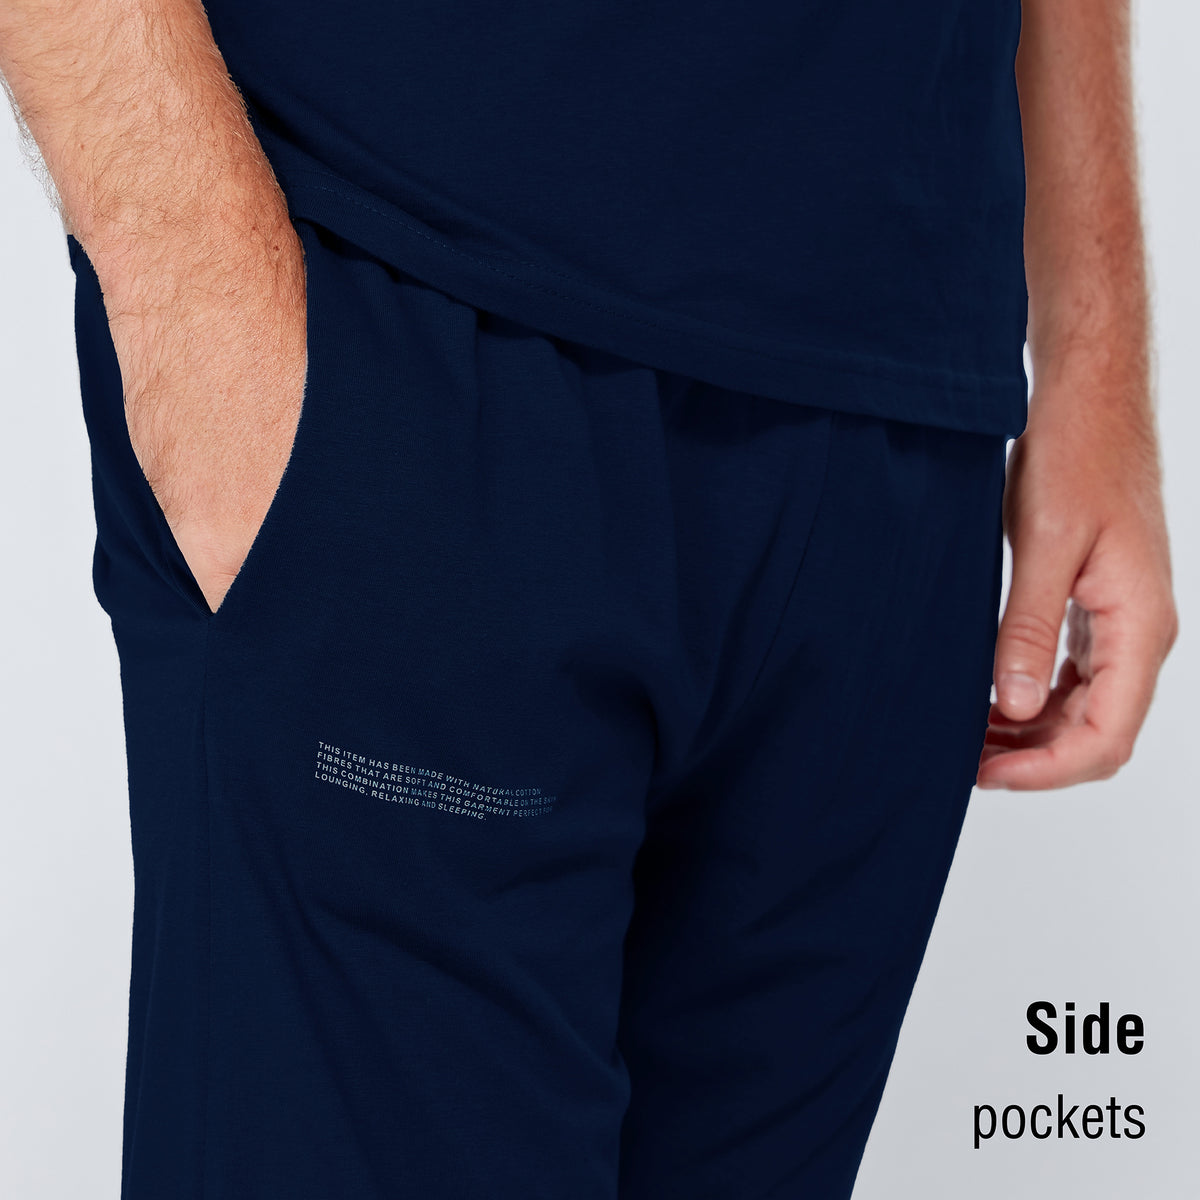 Navy Minimal Print Long Sleeve Pyjama Set 